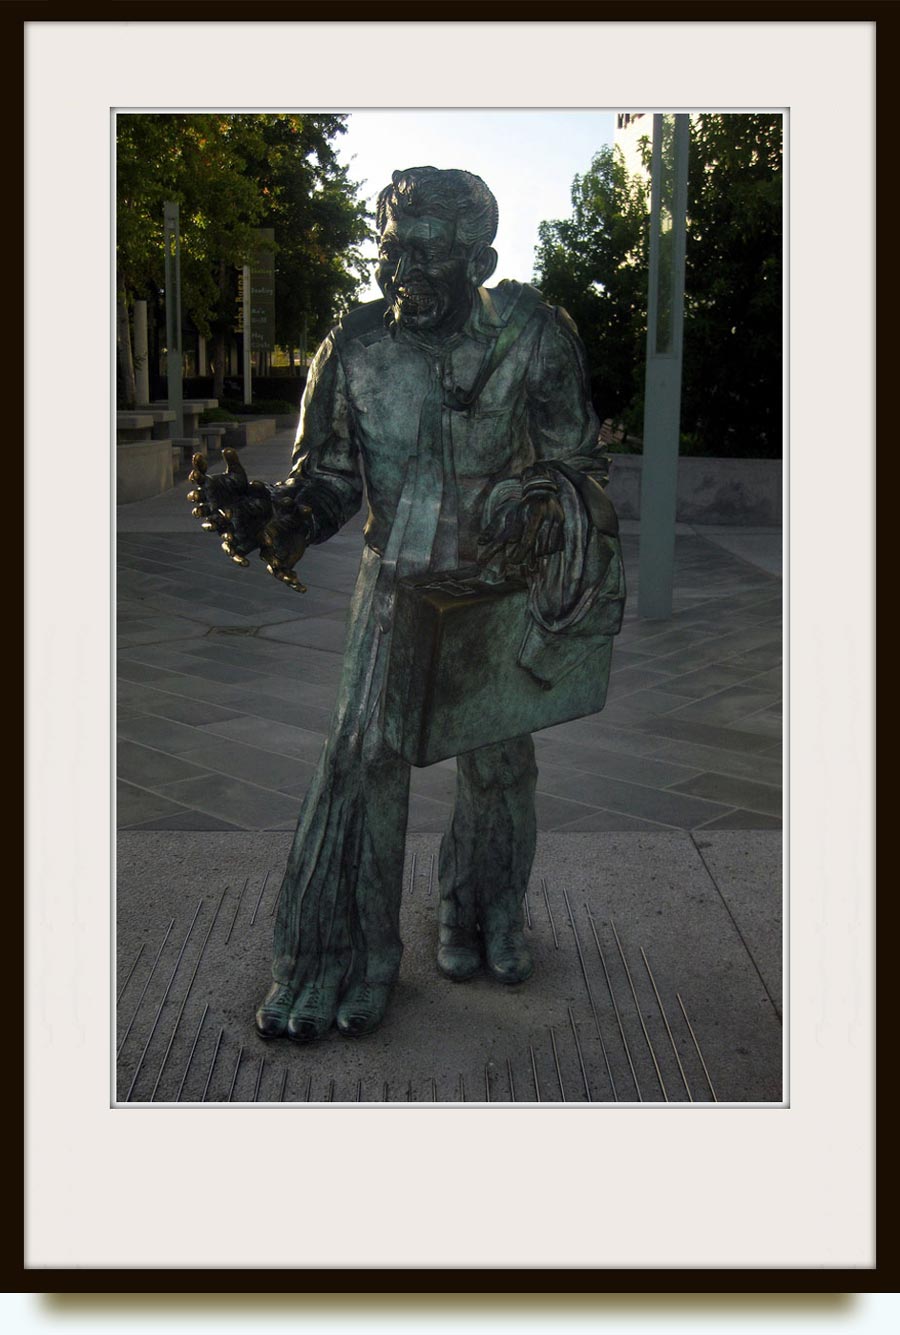 Terry Allen (b. 1943  in Wichita, Kansas). Shaking Man. 1993. Bronze. Life-size. Yerba Buena Gardens, Terrace level of the esplanade, near 4th & Mission, San Francisco, California, US. http://www.flickr.com/photos/wallyg/3955474971/